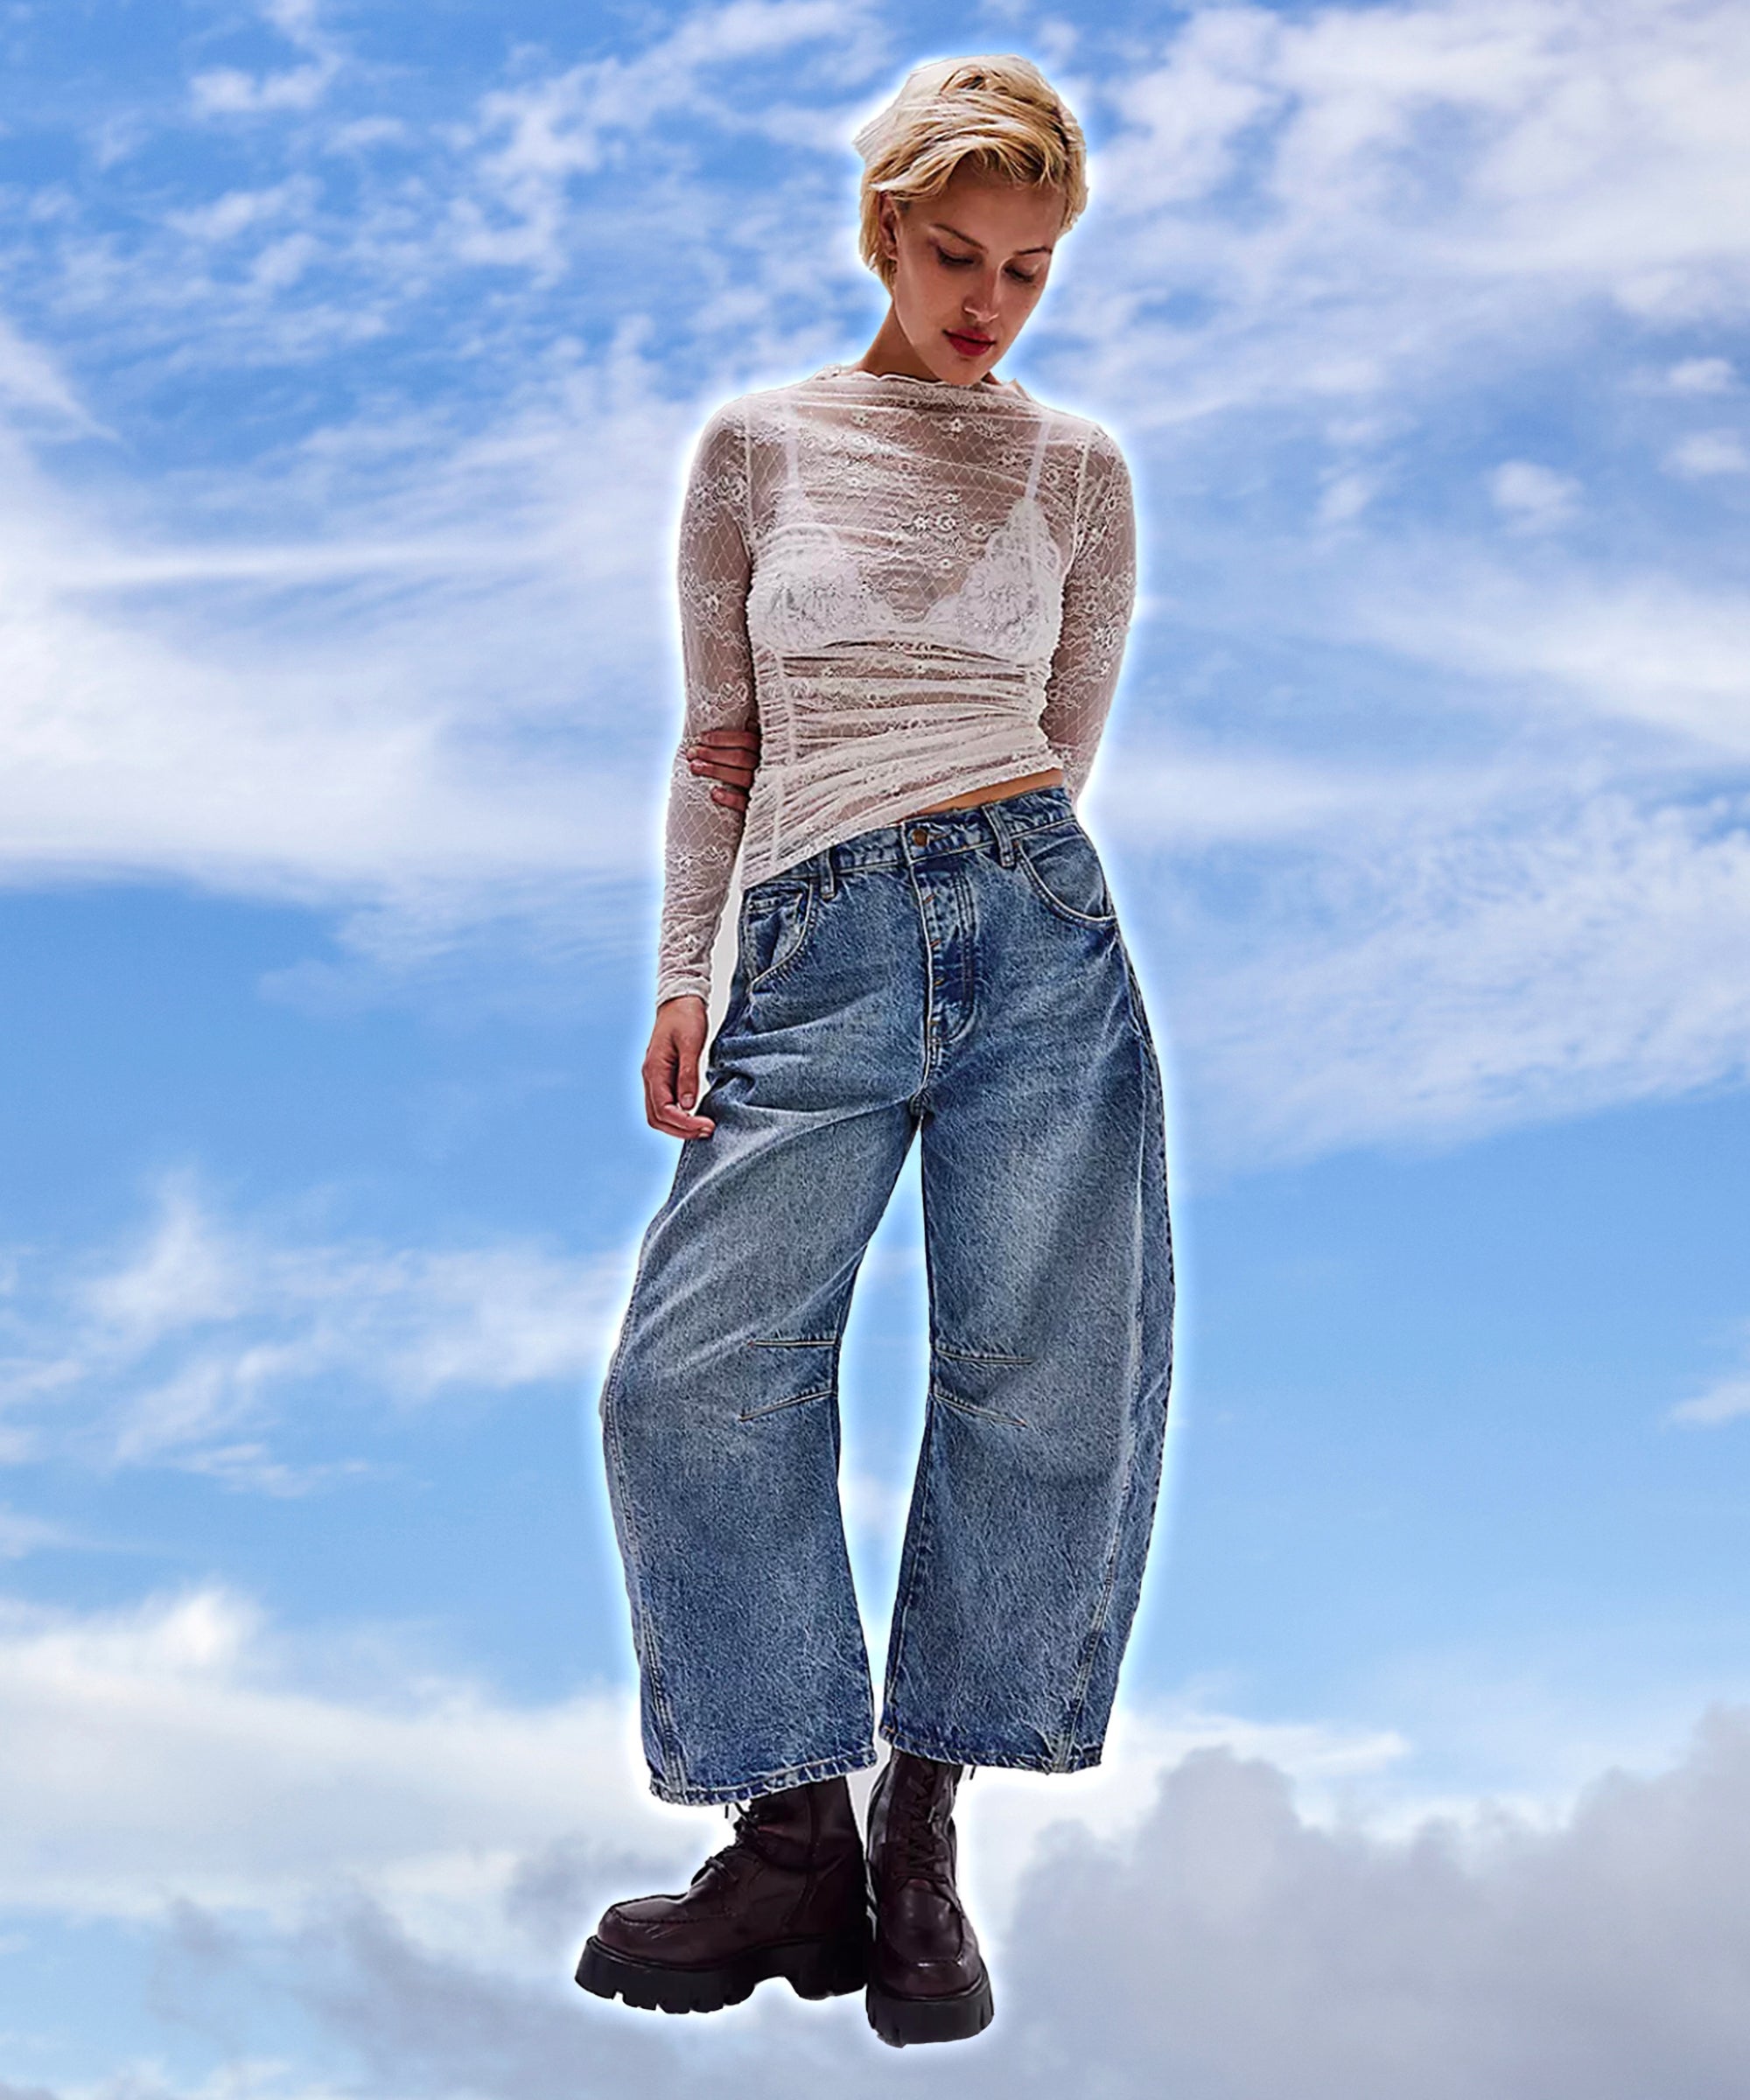 Women's Casual Jeans Soft Mid-Rise Waist Denim Leggings Stretch Skinny Jeans  Slim Fit Pull On Jean Shapewear Comfy Pants(M,Black) 